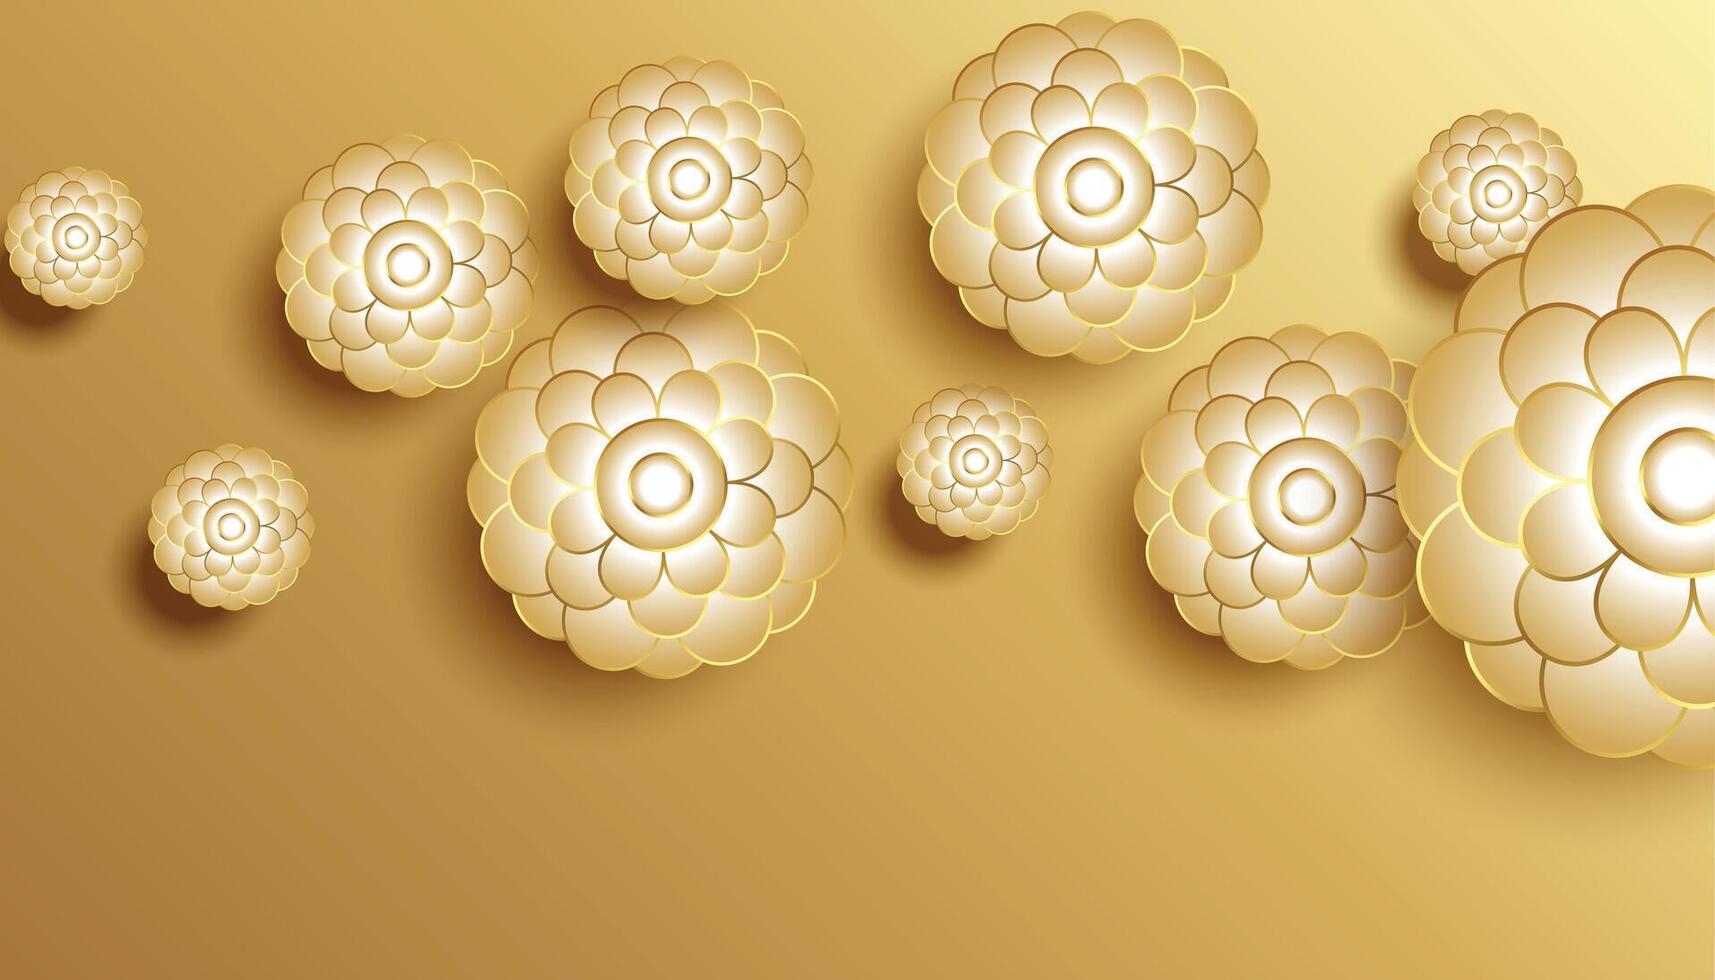 3d style golden flowers decorative background design vector